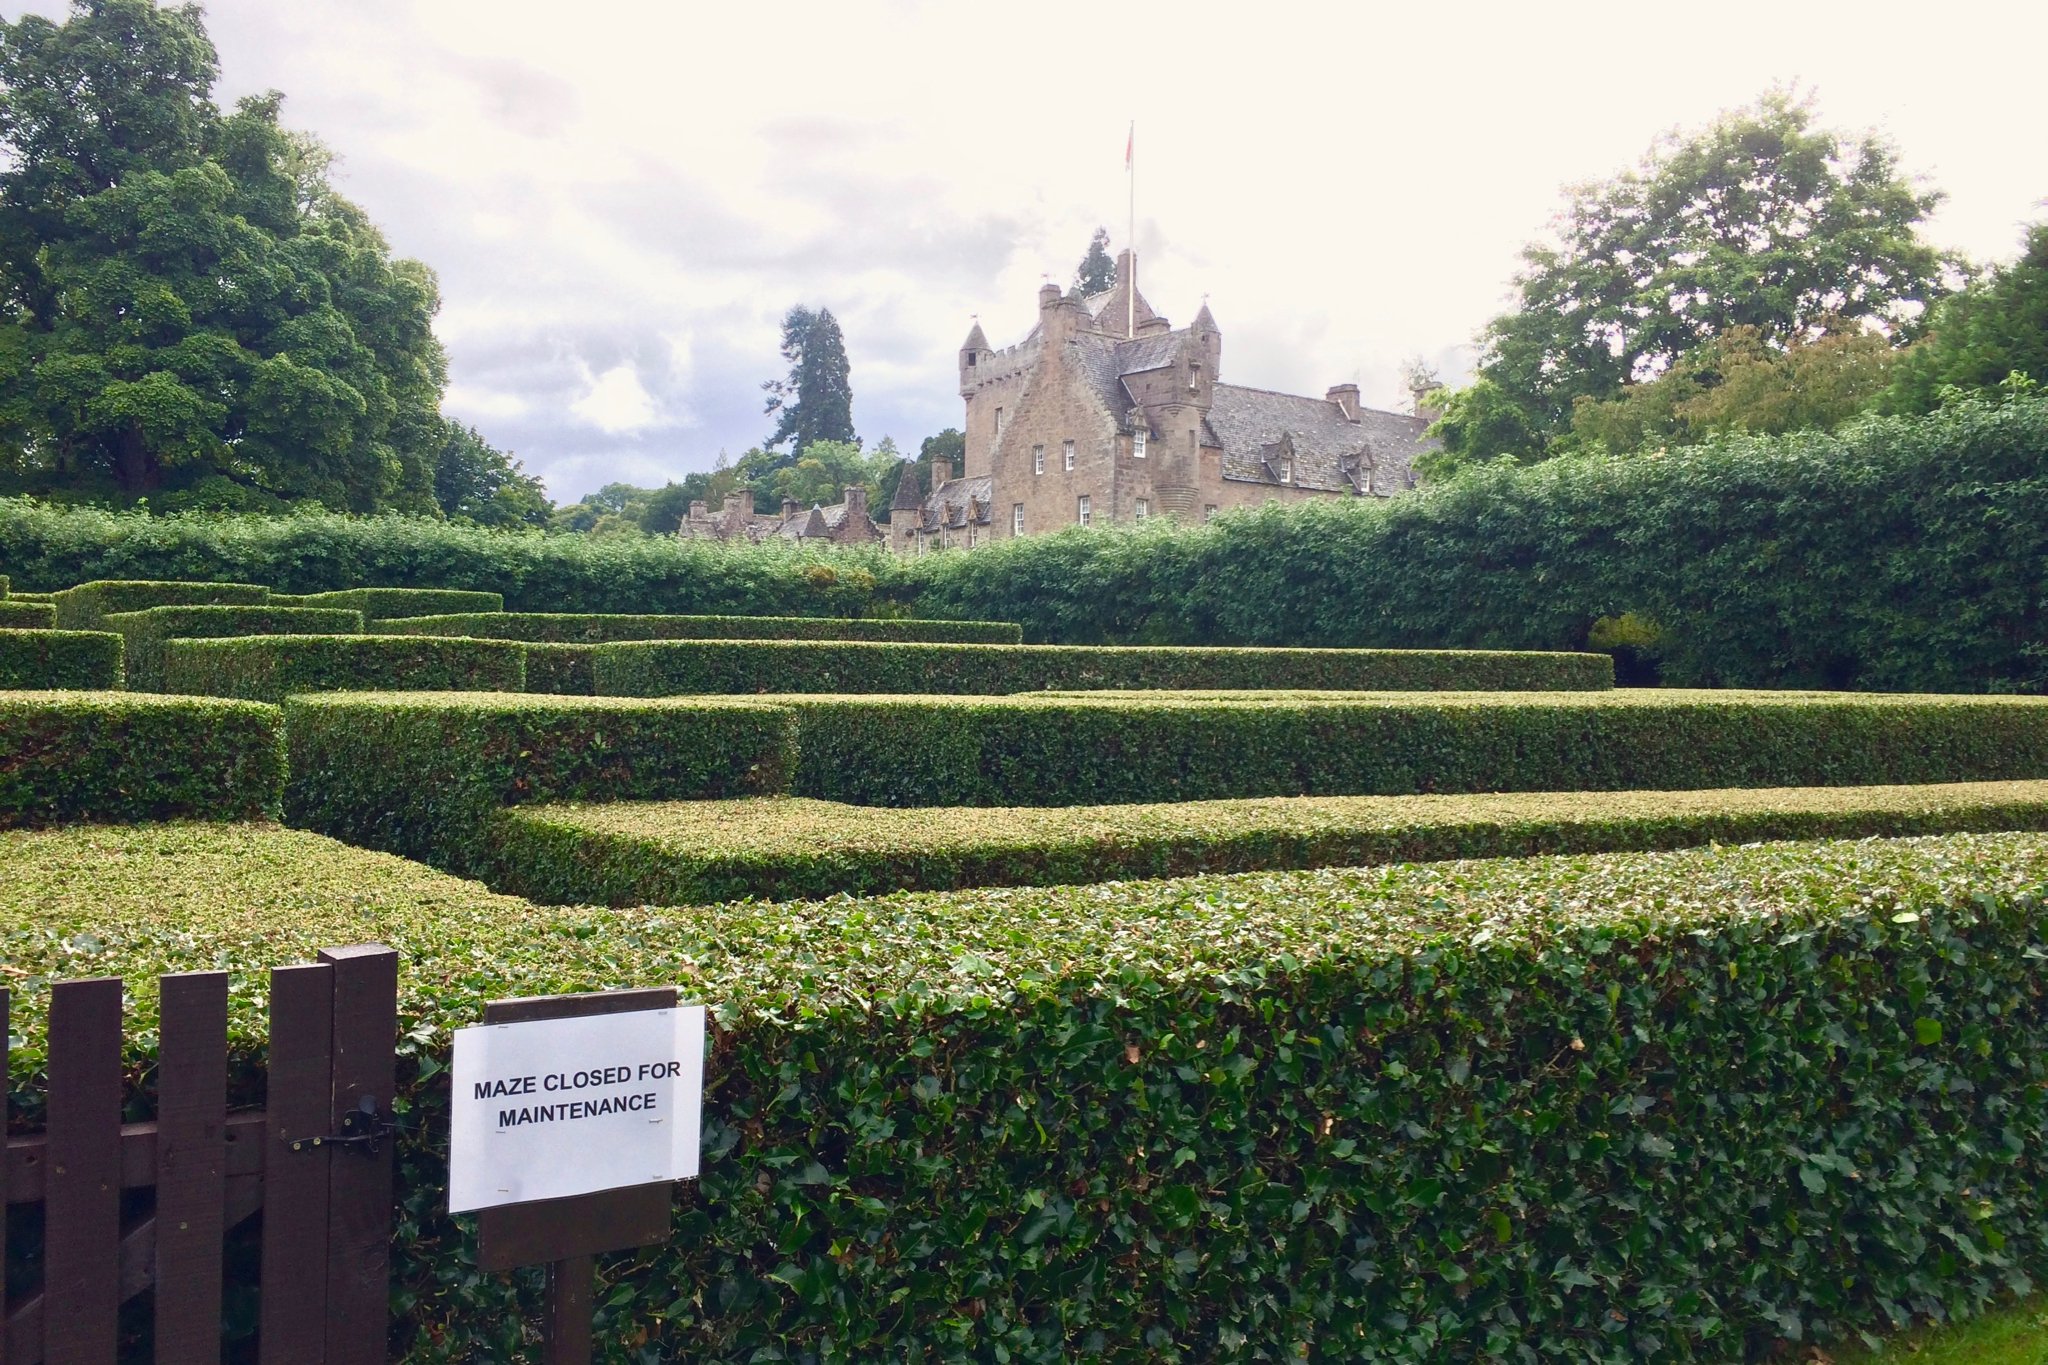 Maze closed for maintenance at Cawdor Castle